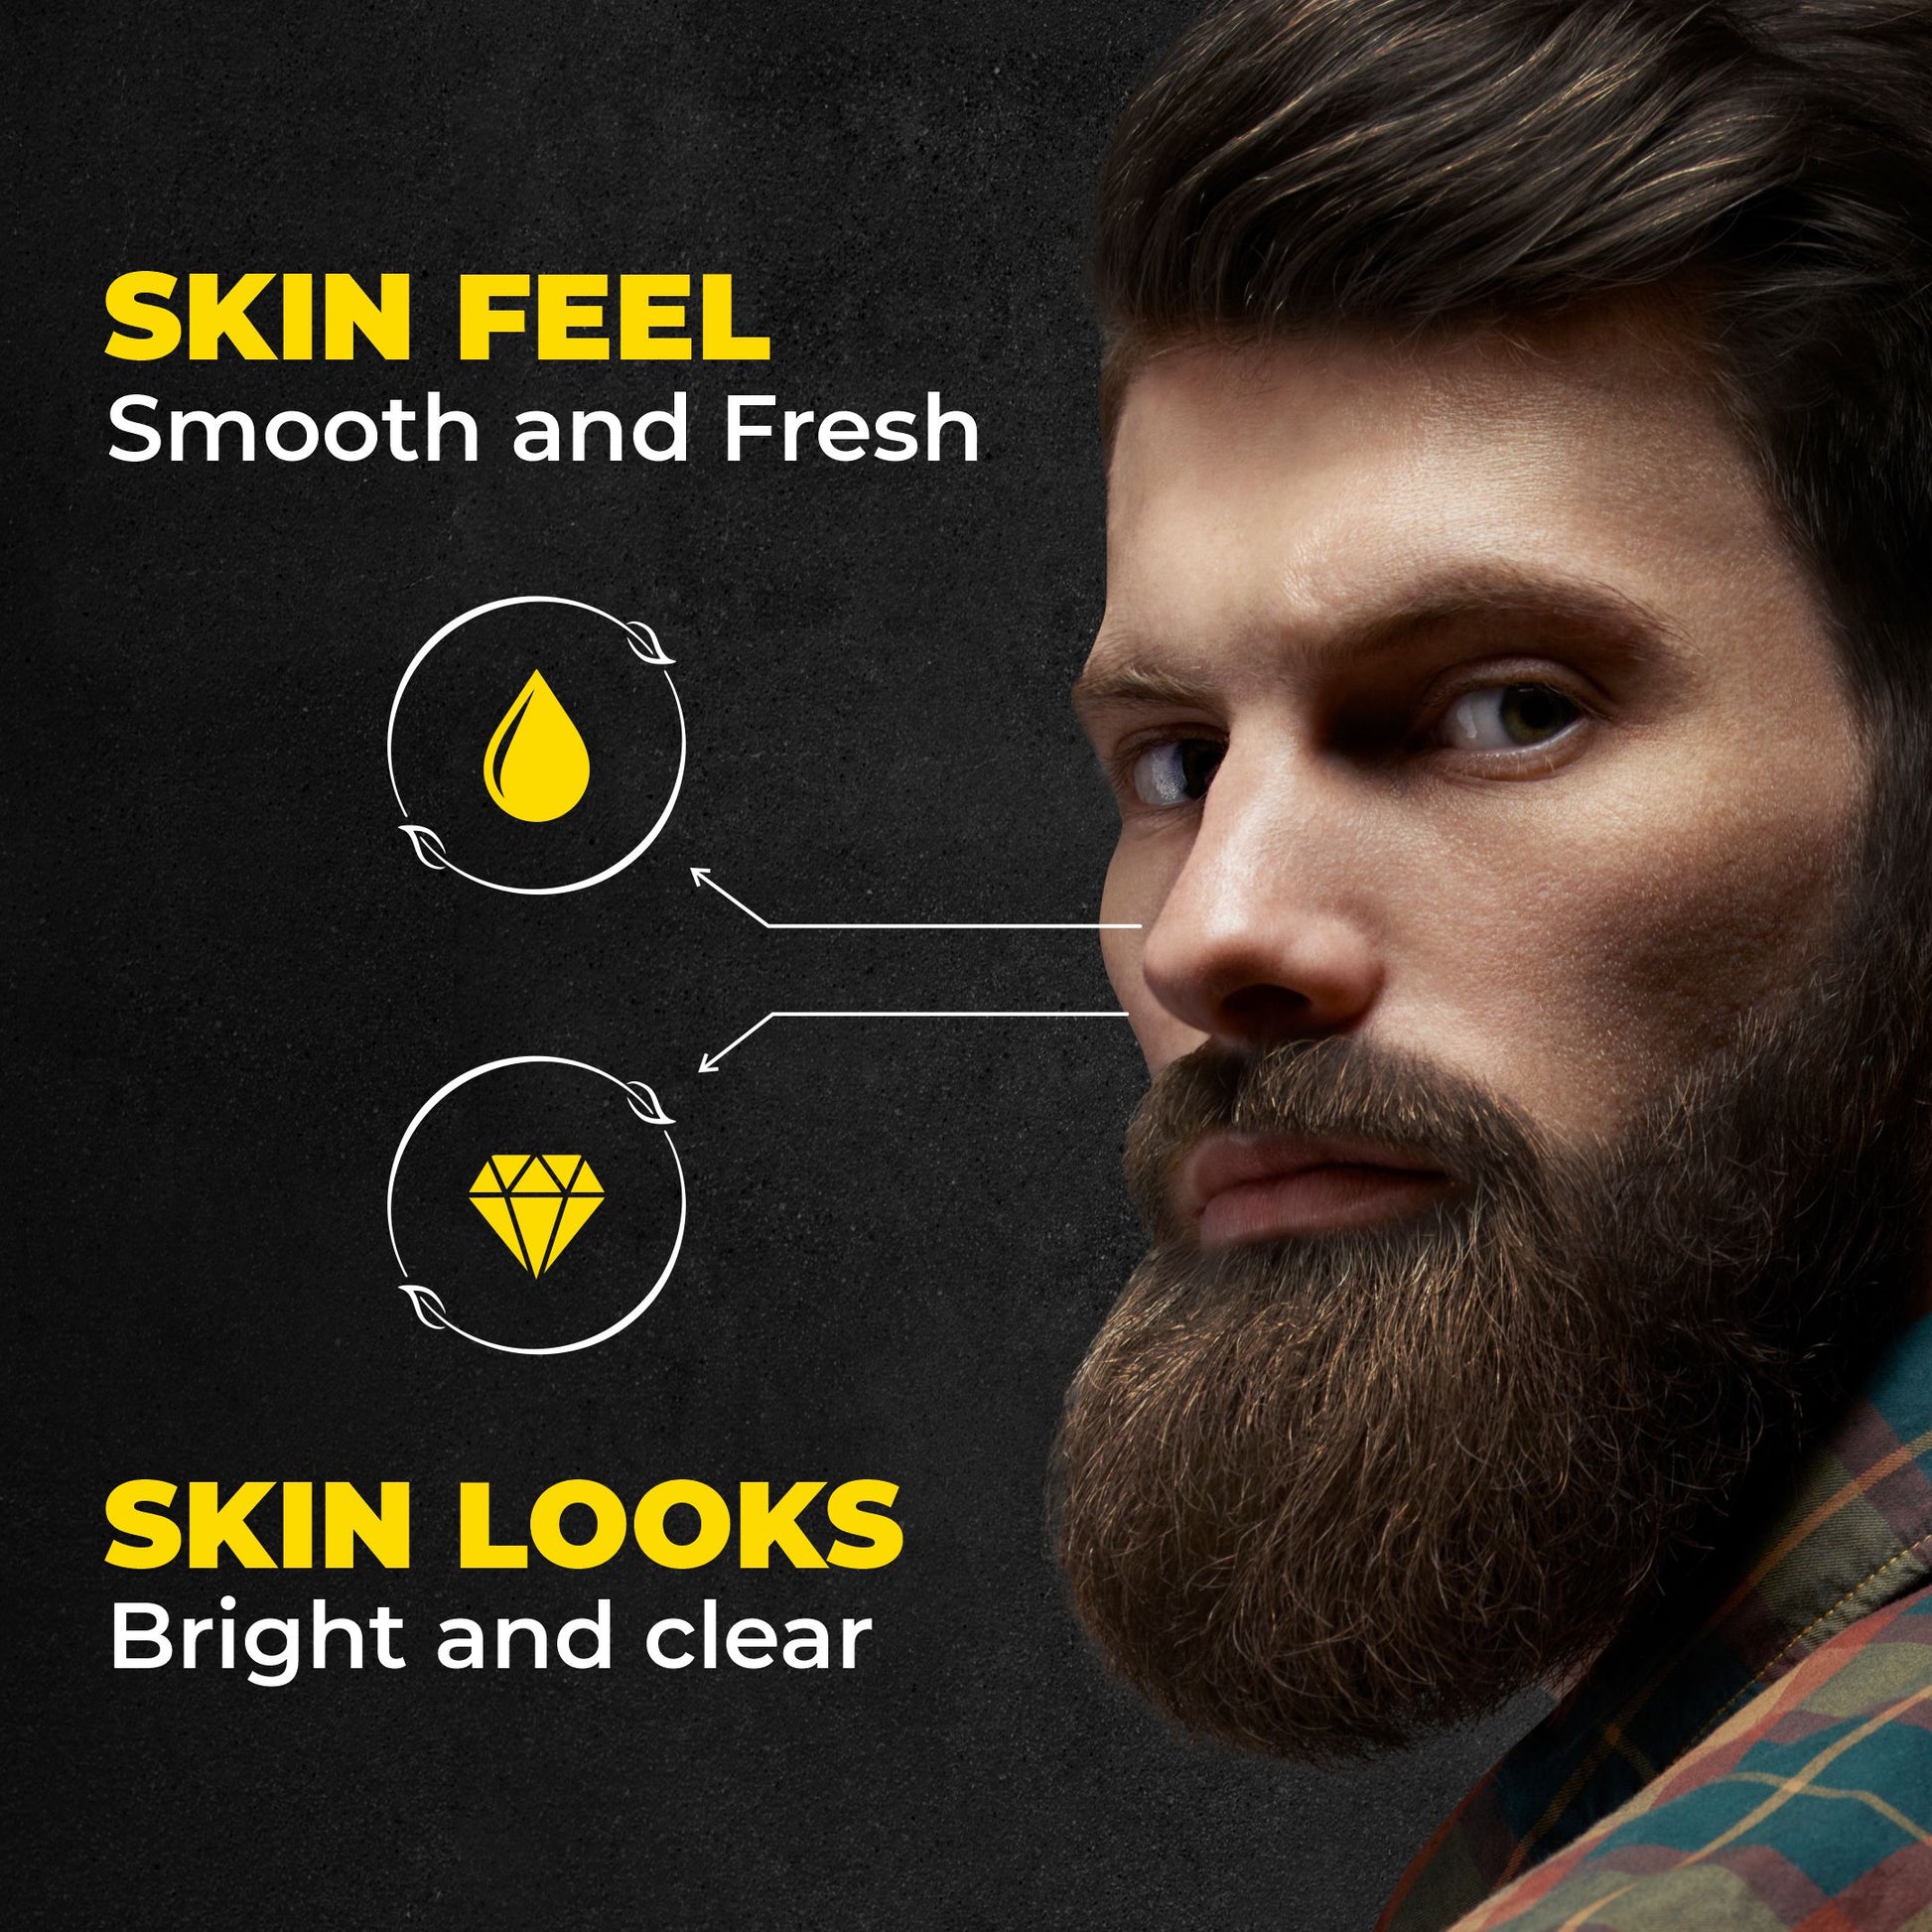 Beardo Ultimate Facewash Combo